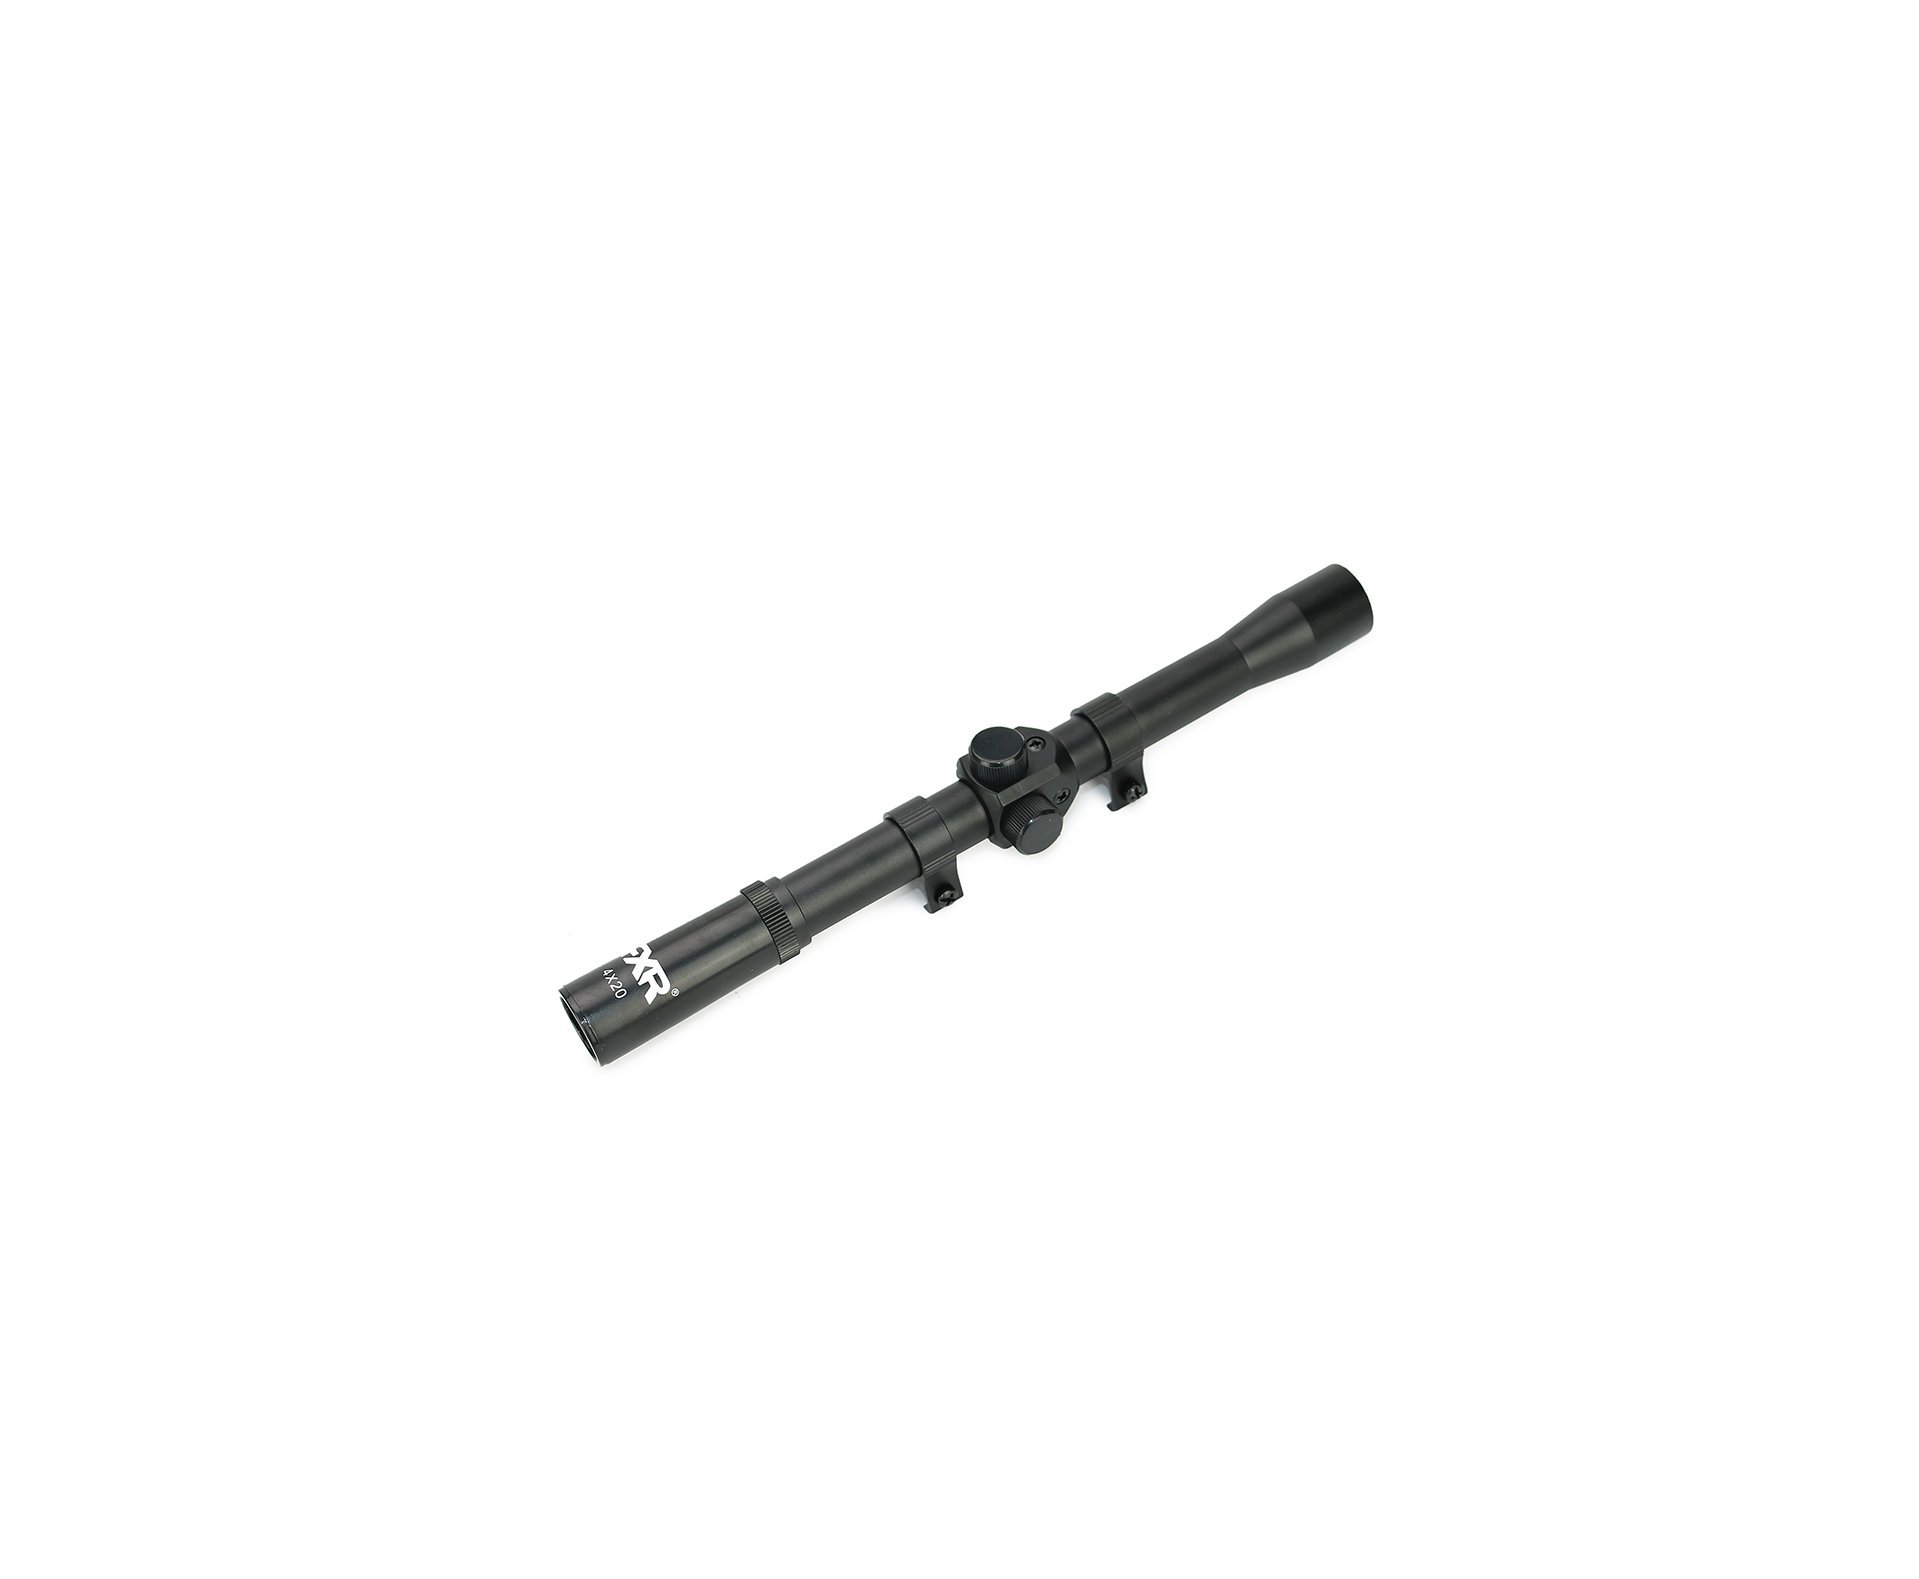 Carabina De Pressão Under-b Wf600 Cal 5,5mm Black - Qgk Spa + Luneta 4x20 + Capa + Chumbinho